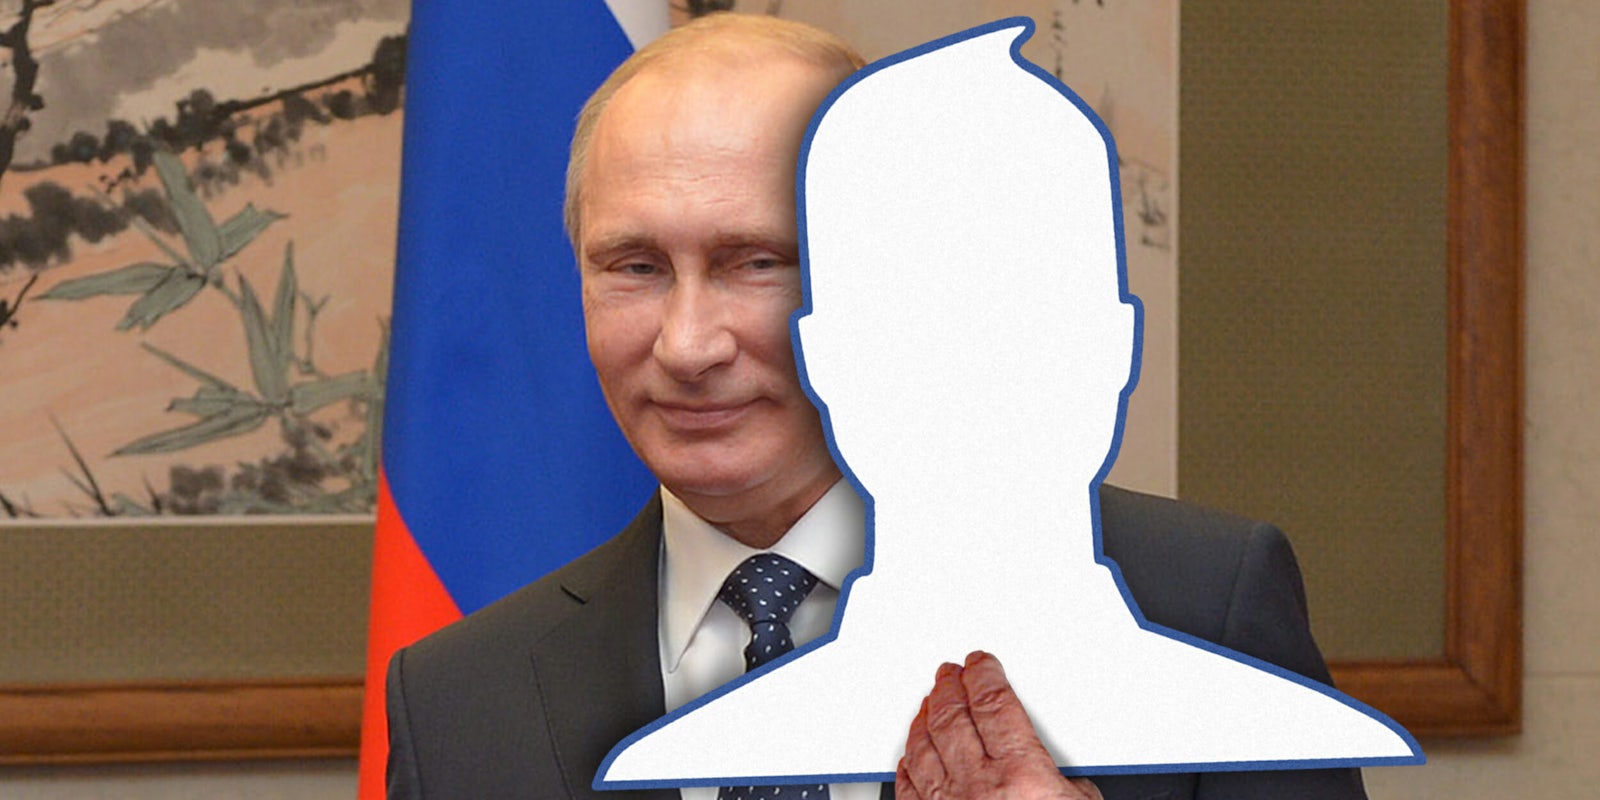 Putin hiding behind Facebook icon